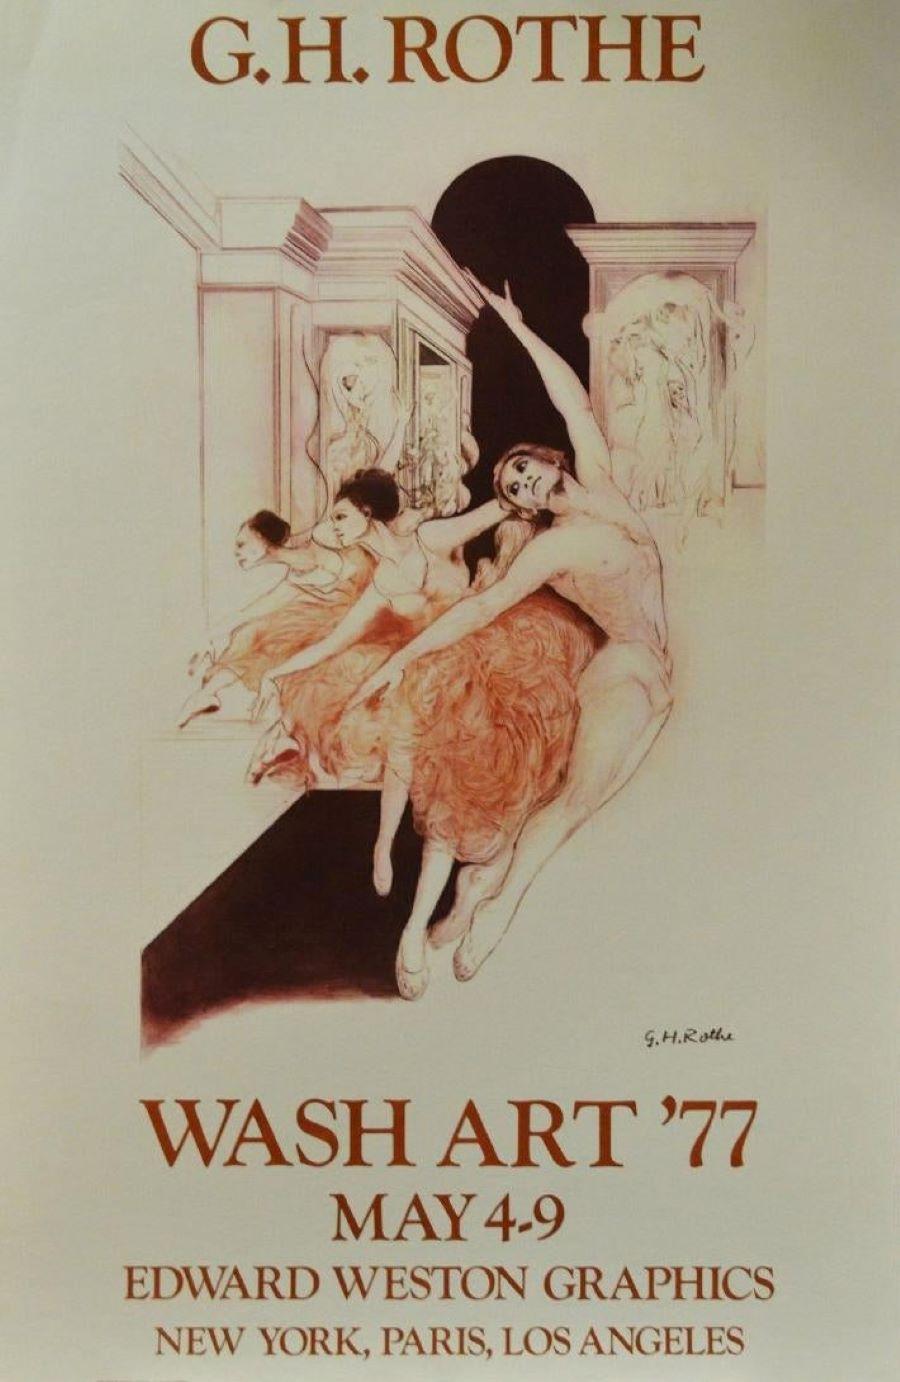 G.H. Rothe Portrait Print - Wash Art '77, May 4-9, Edward Weston Graphics- New York, Paris, Los Angeles